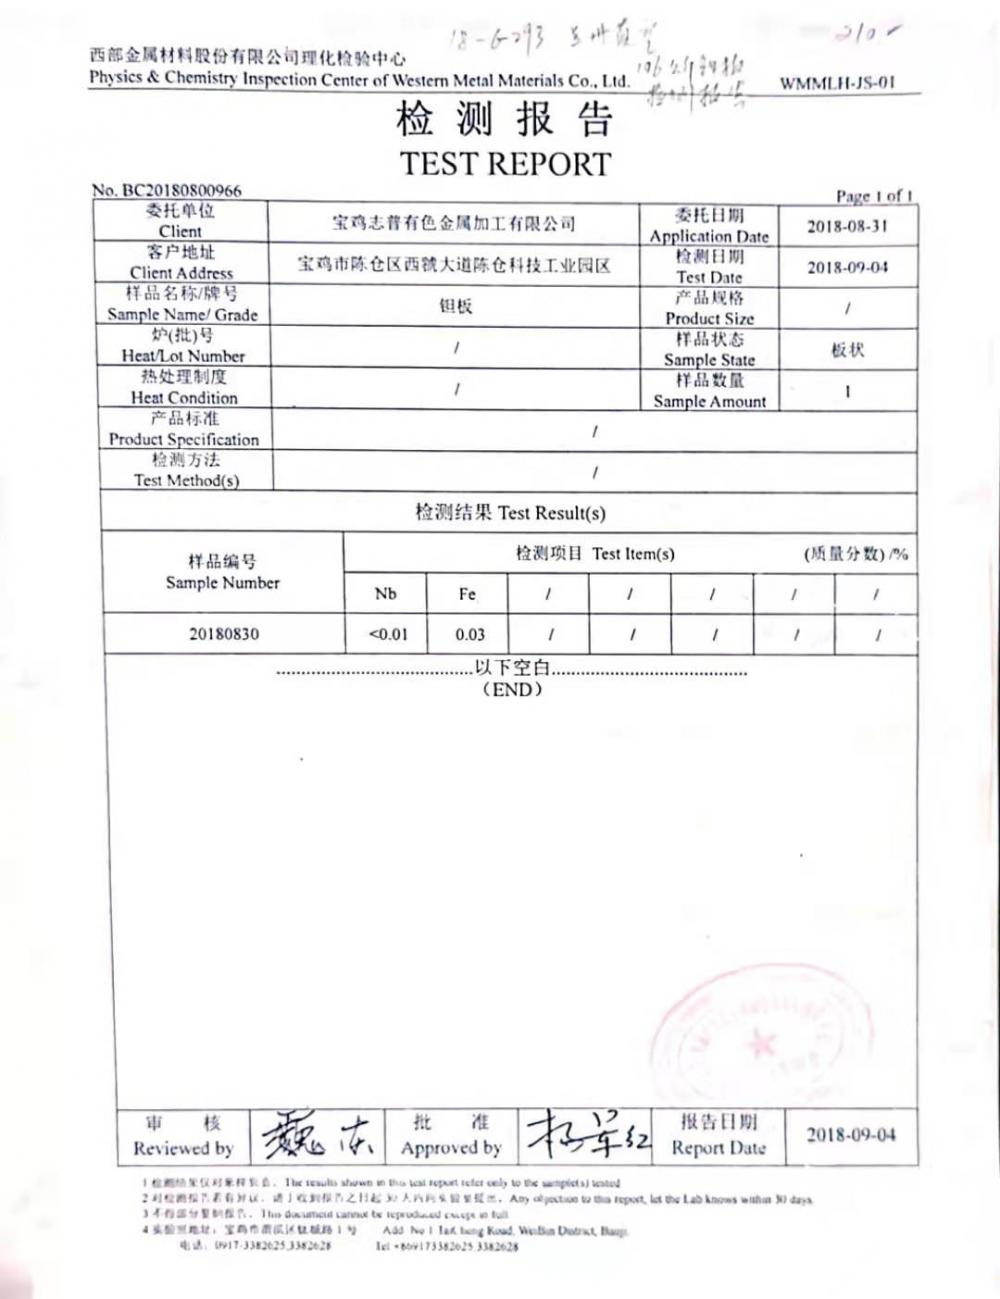 Tantalum Plate Test Report 